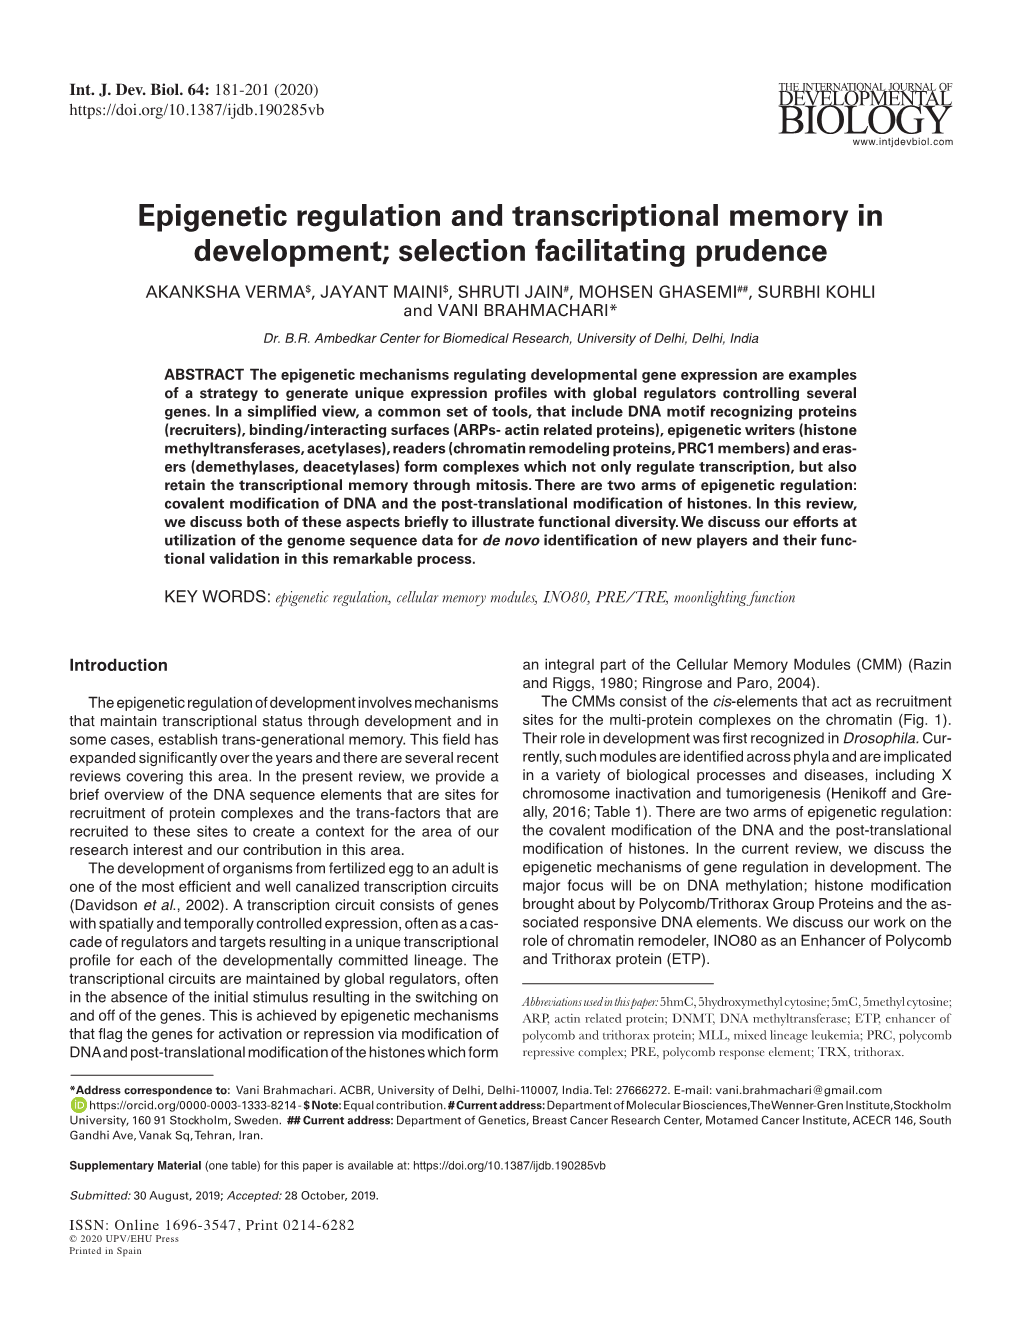 Epigenetic Regulation and Transcriptional Memory In